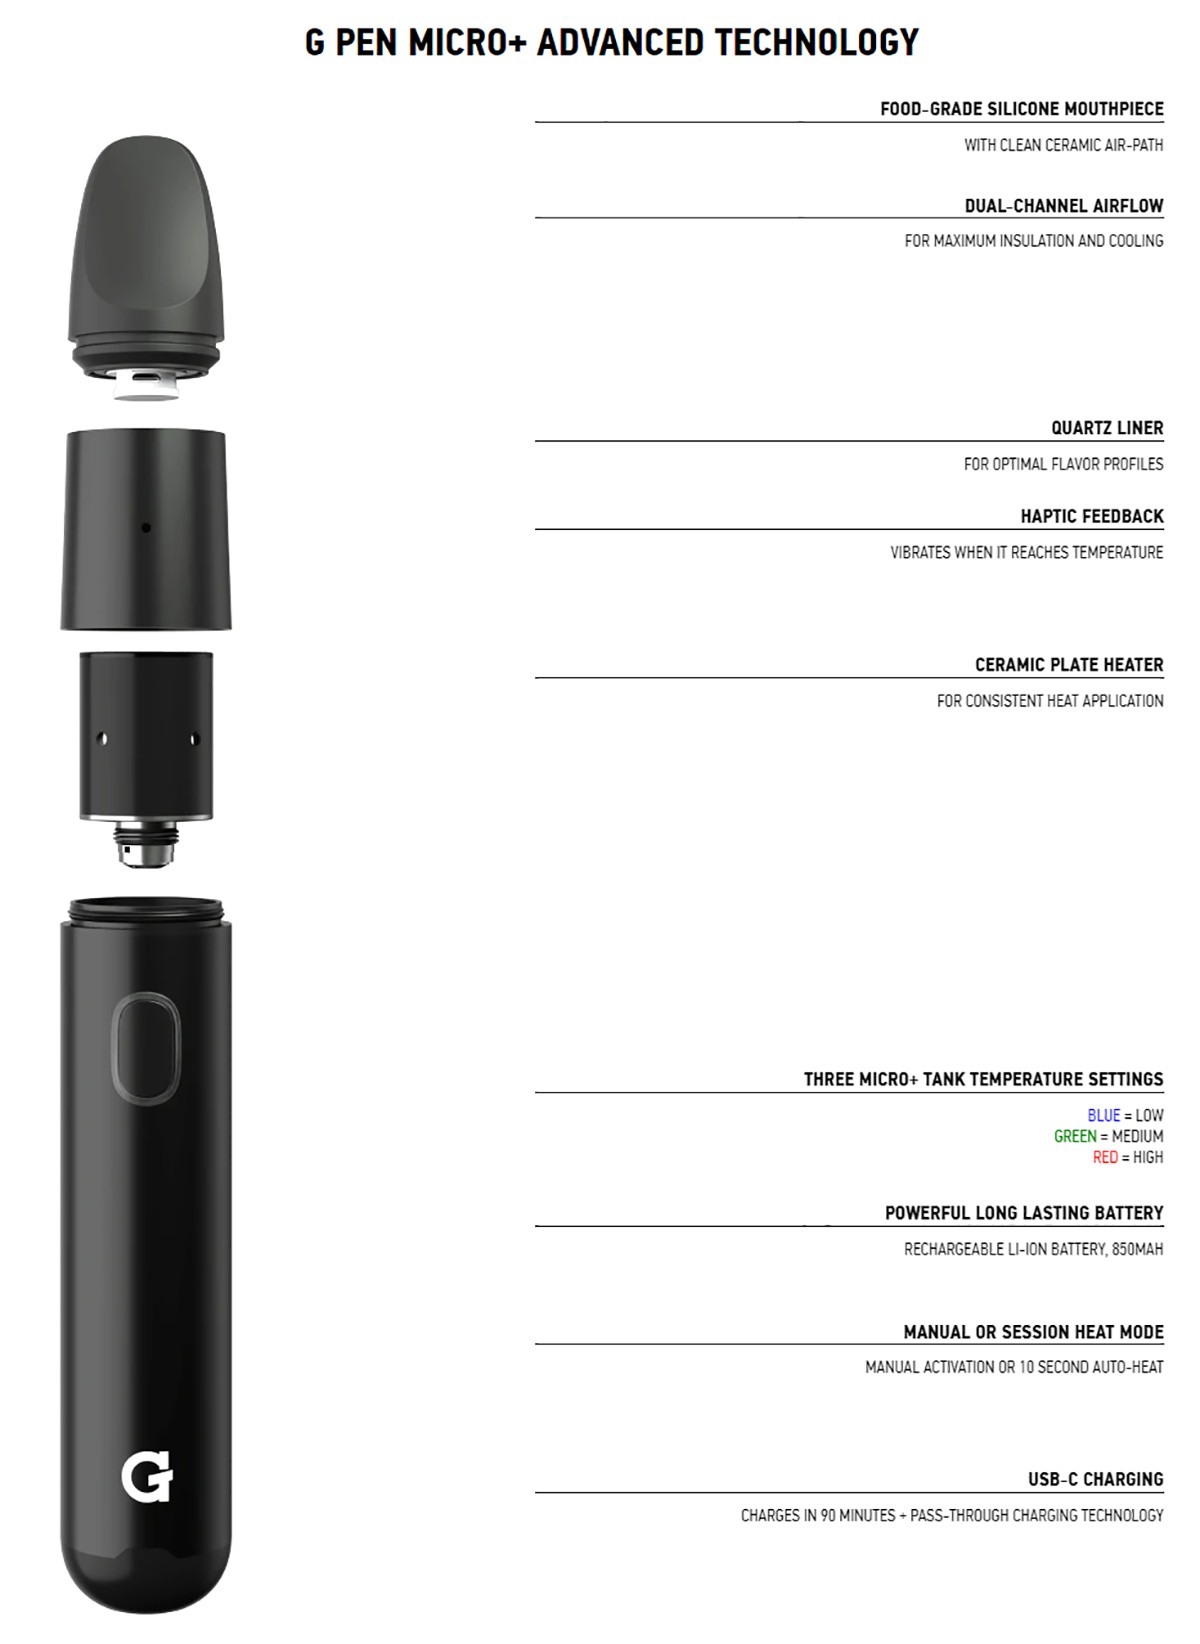 G Pen Micro+ Vaporizer Specifications